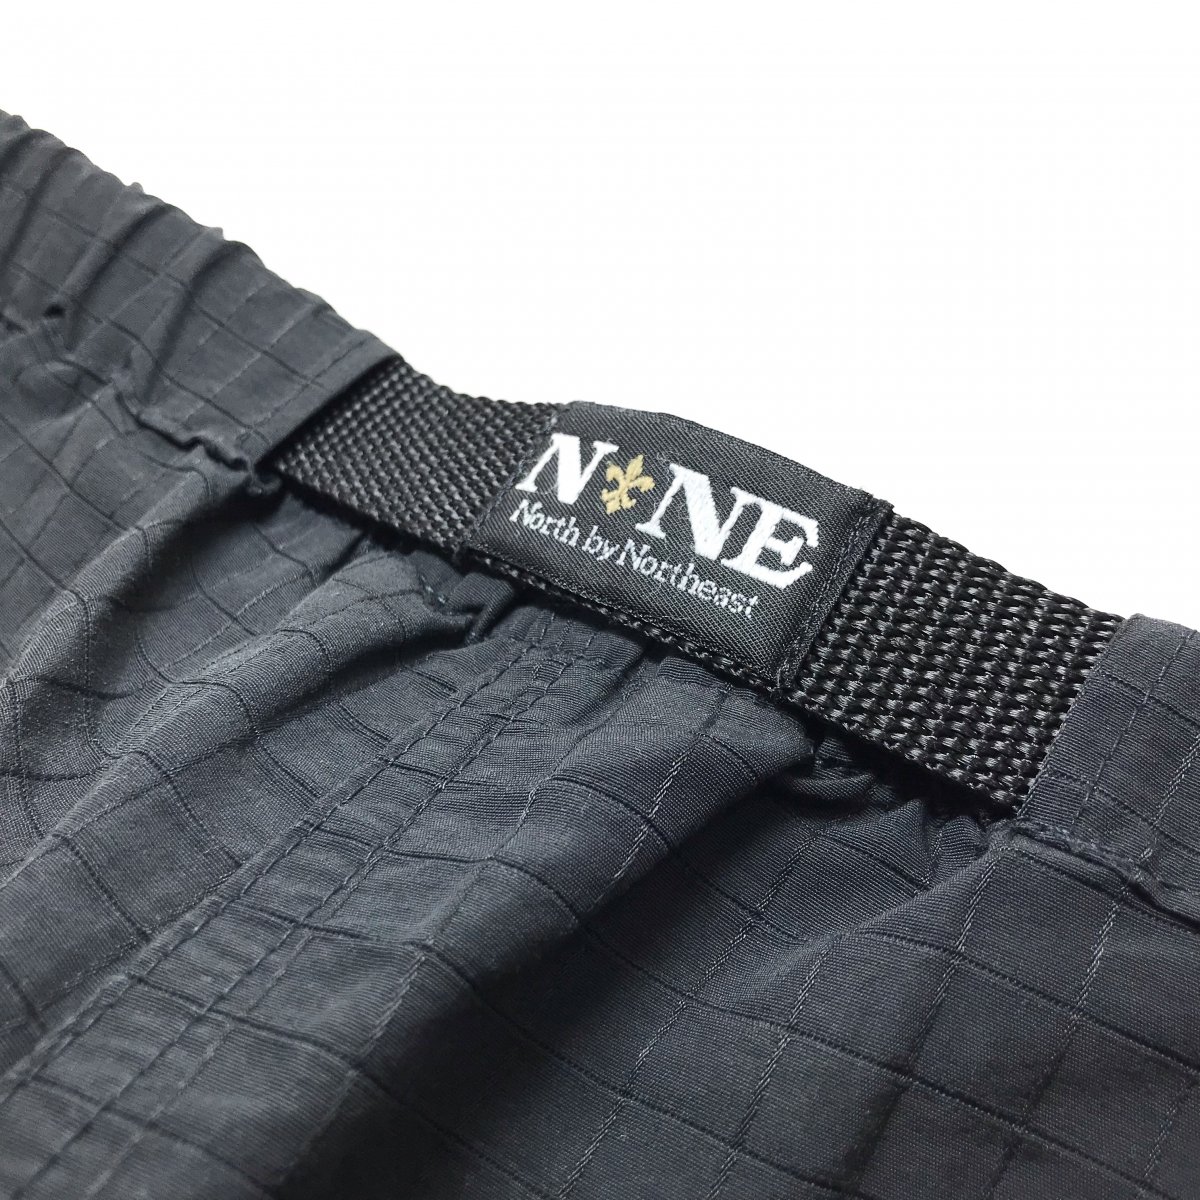 USA製 North by Northeast Rip Stop Nylon Cargo Shorts 黒 L ノース